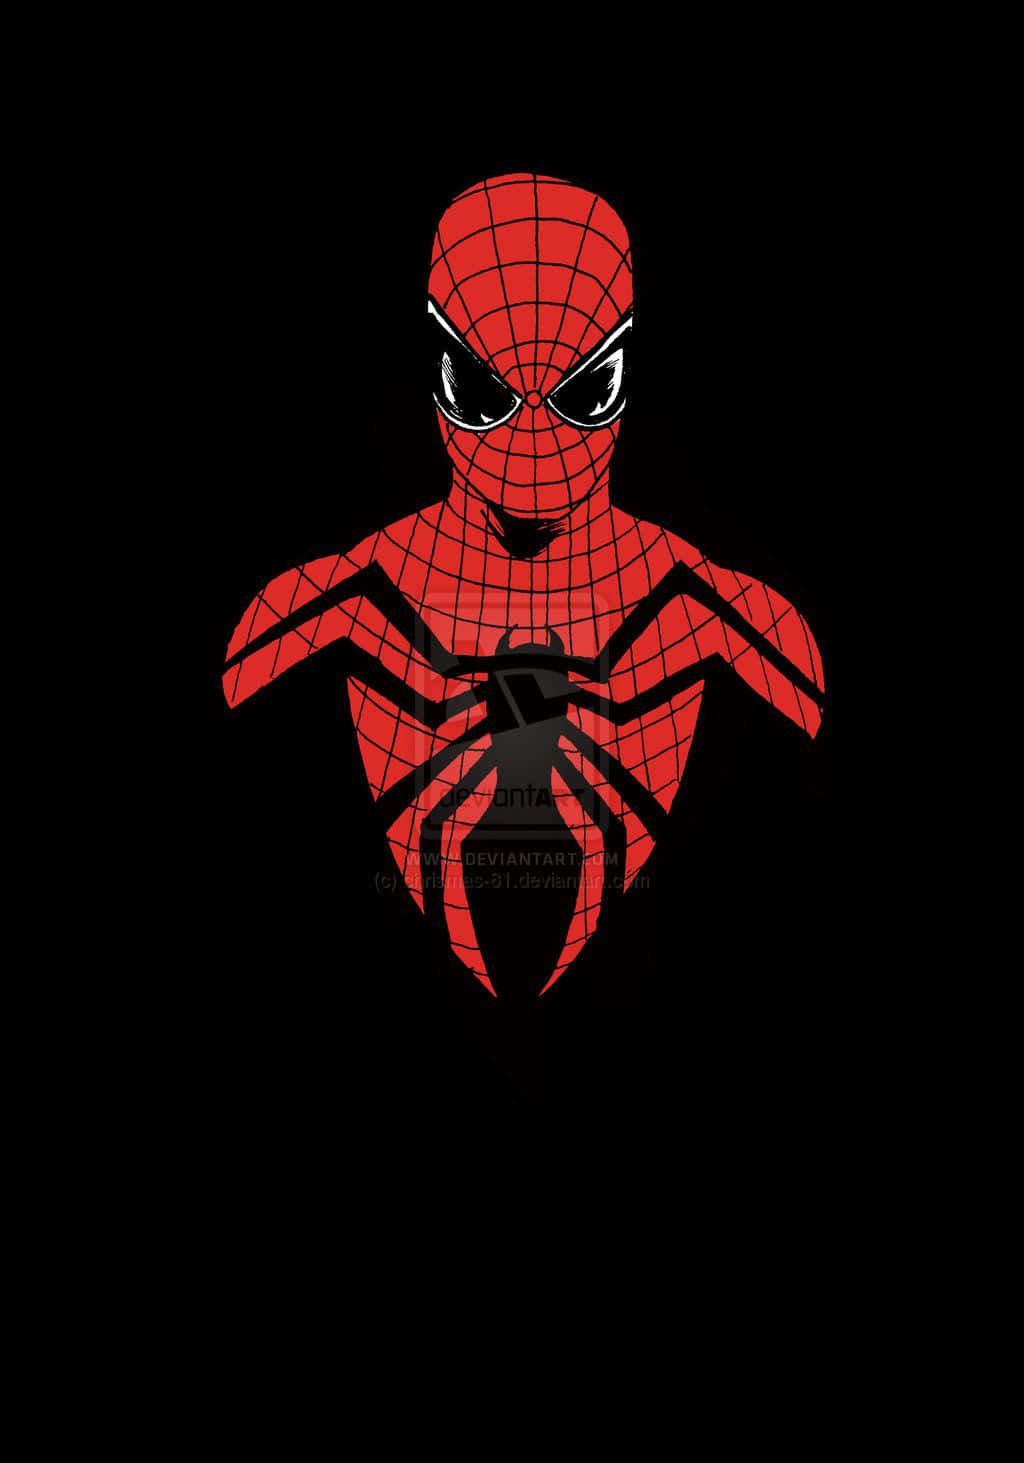 Red Spider Man Logo Wallpaper